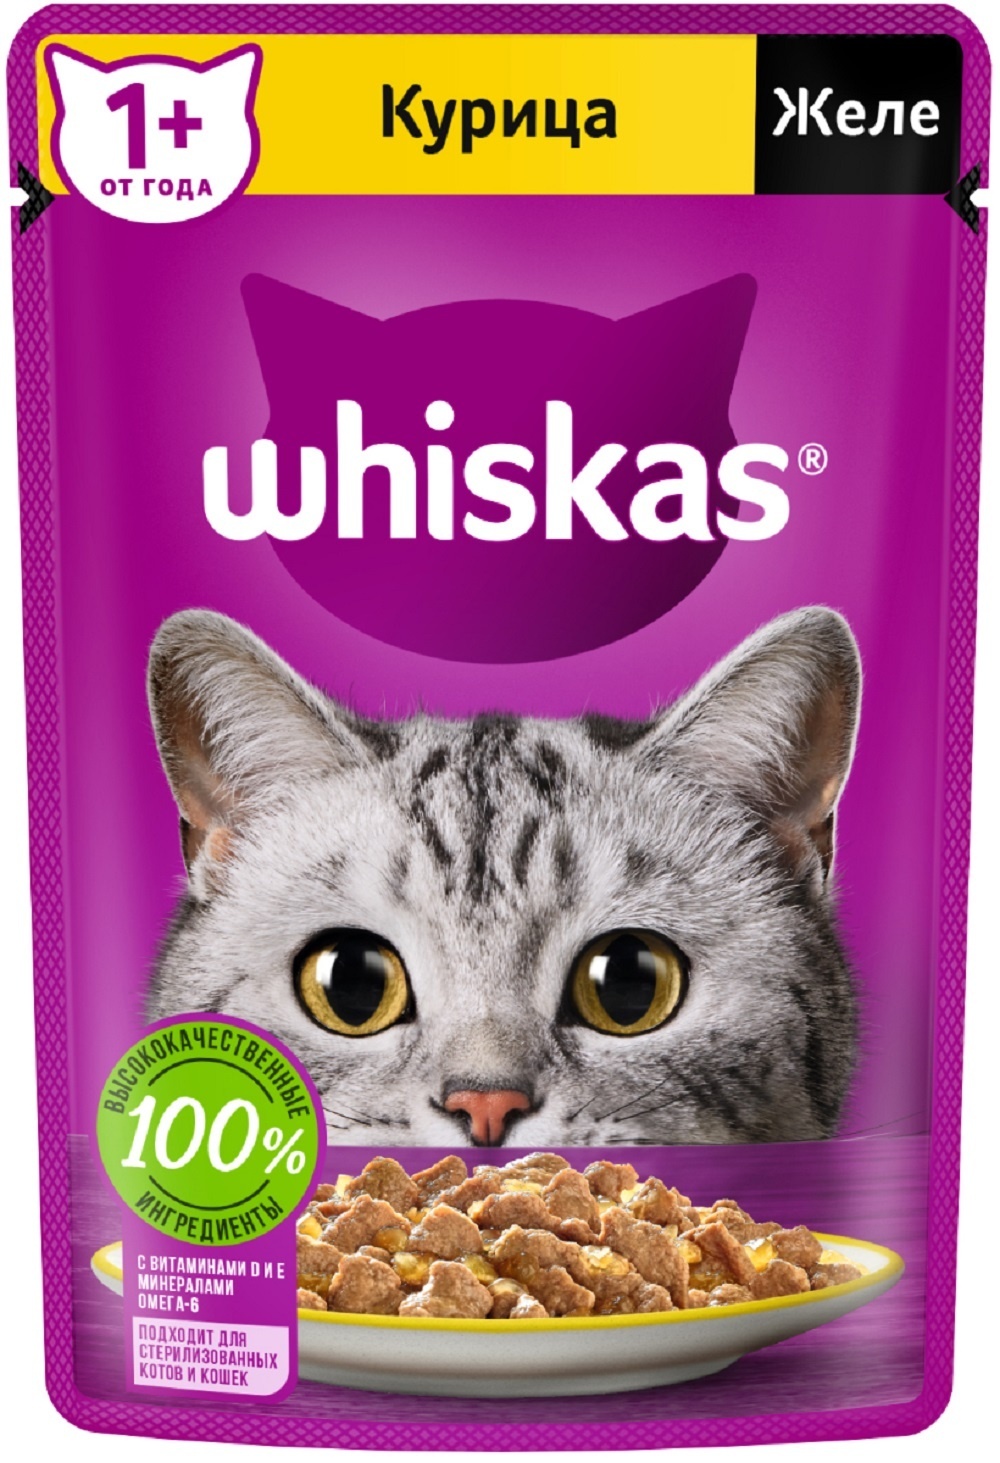 Whiskas Whiskas влажный корм для кошек желе, с курицей (75 г)